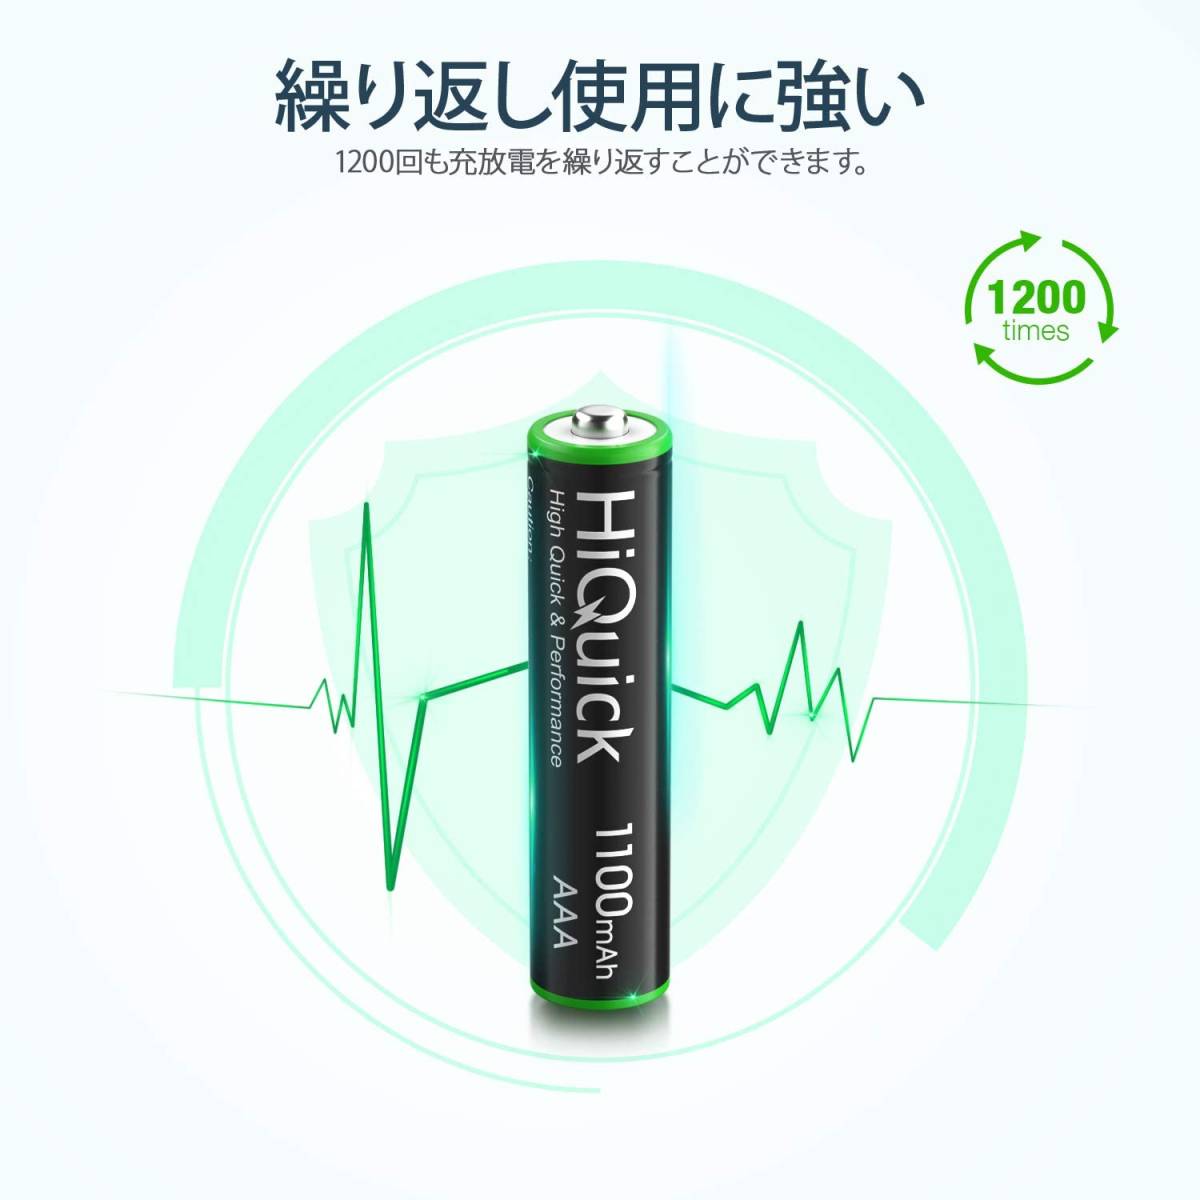 HiQuick 電池 単4 充電式 単4充電池 ニッケル水素電池1100mAh 8本入り ケース2個付き 約1200回使用可能 単_画像3